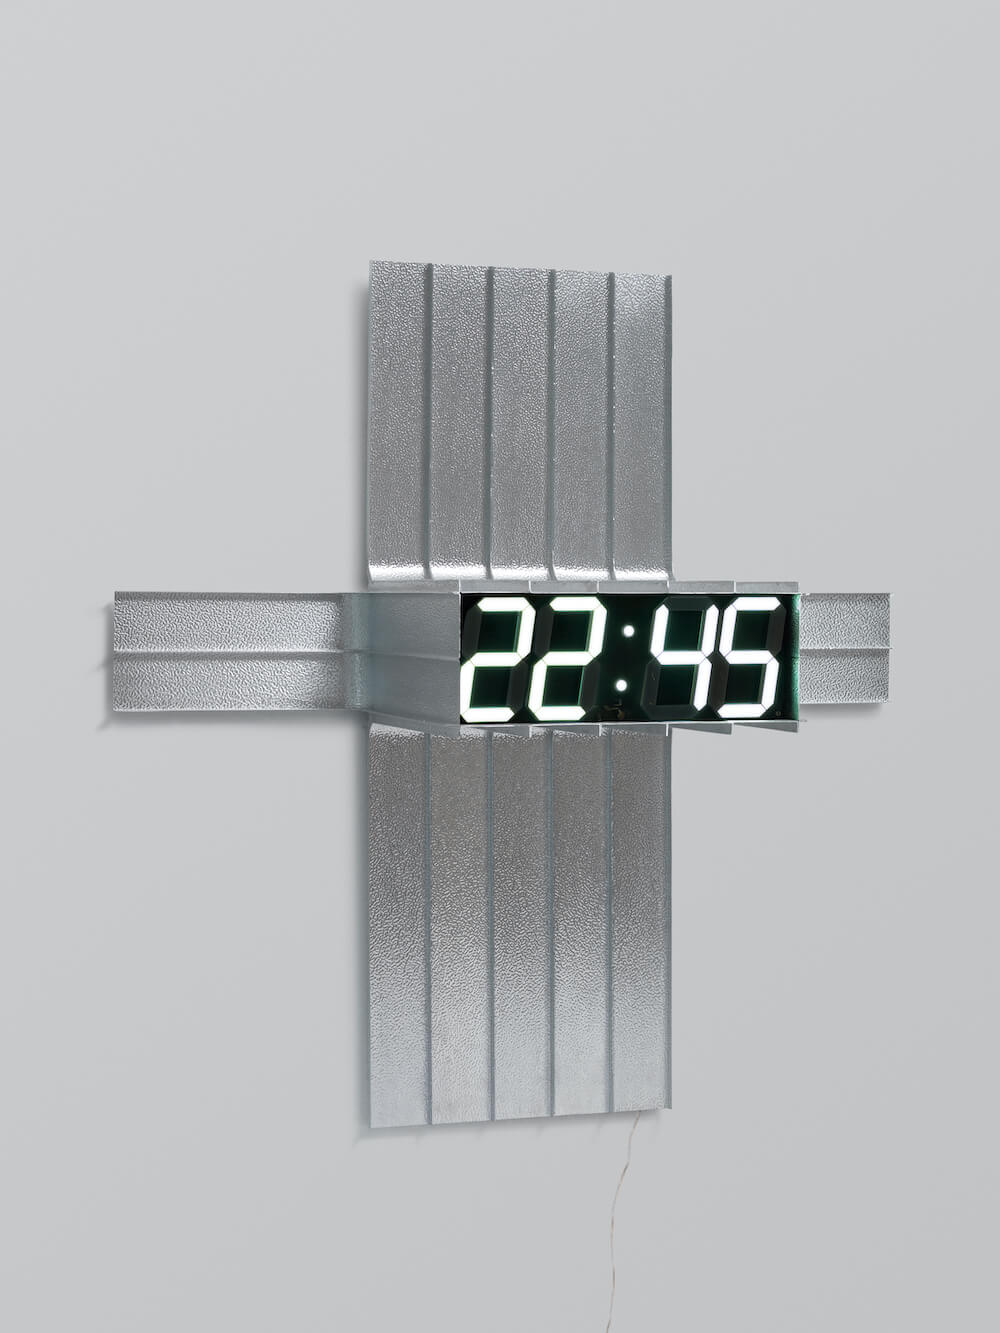 David Taylor - sculpture clock